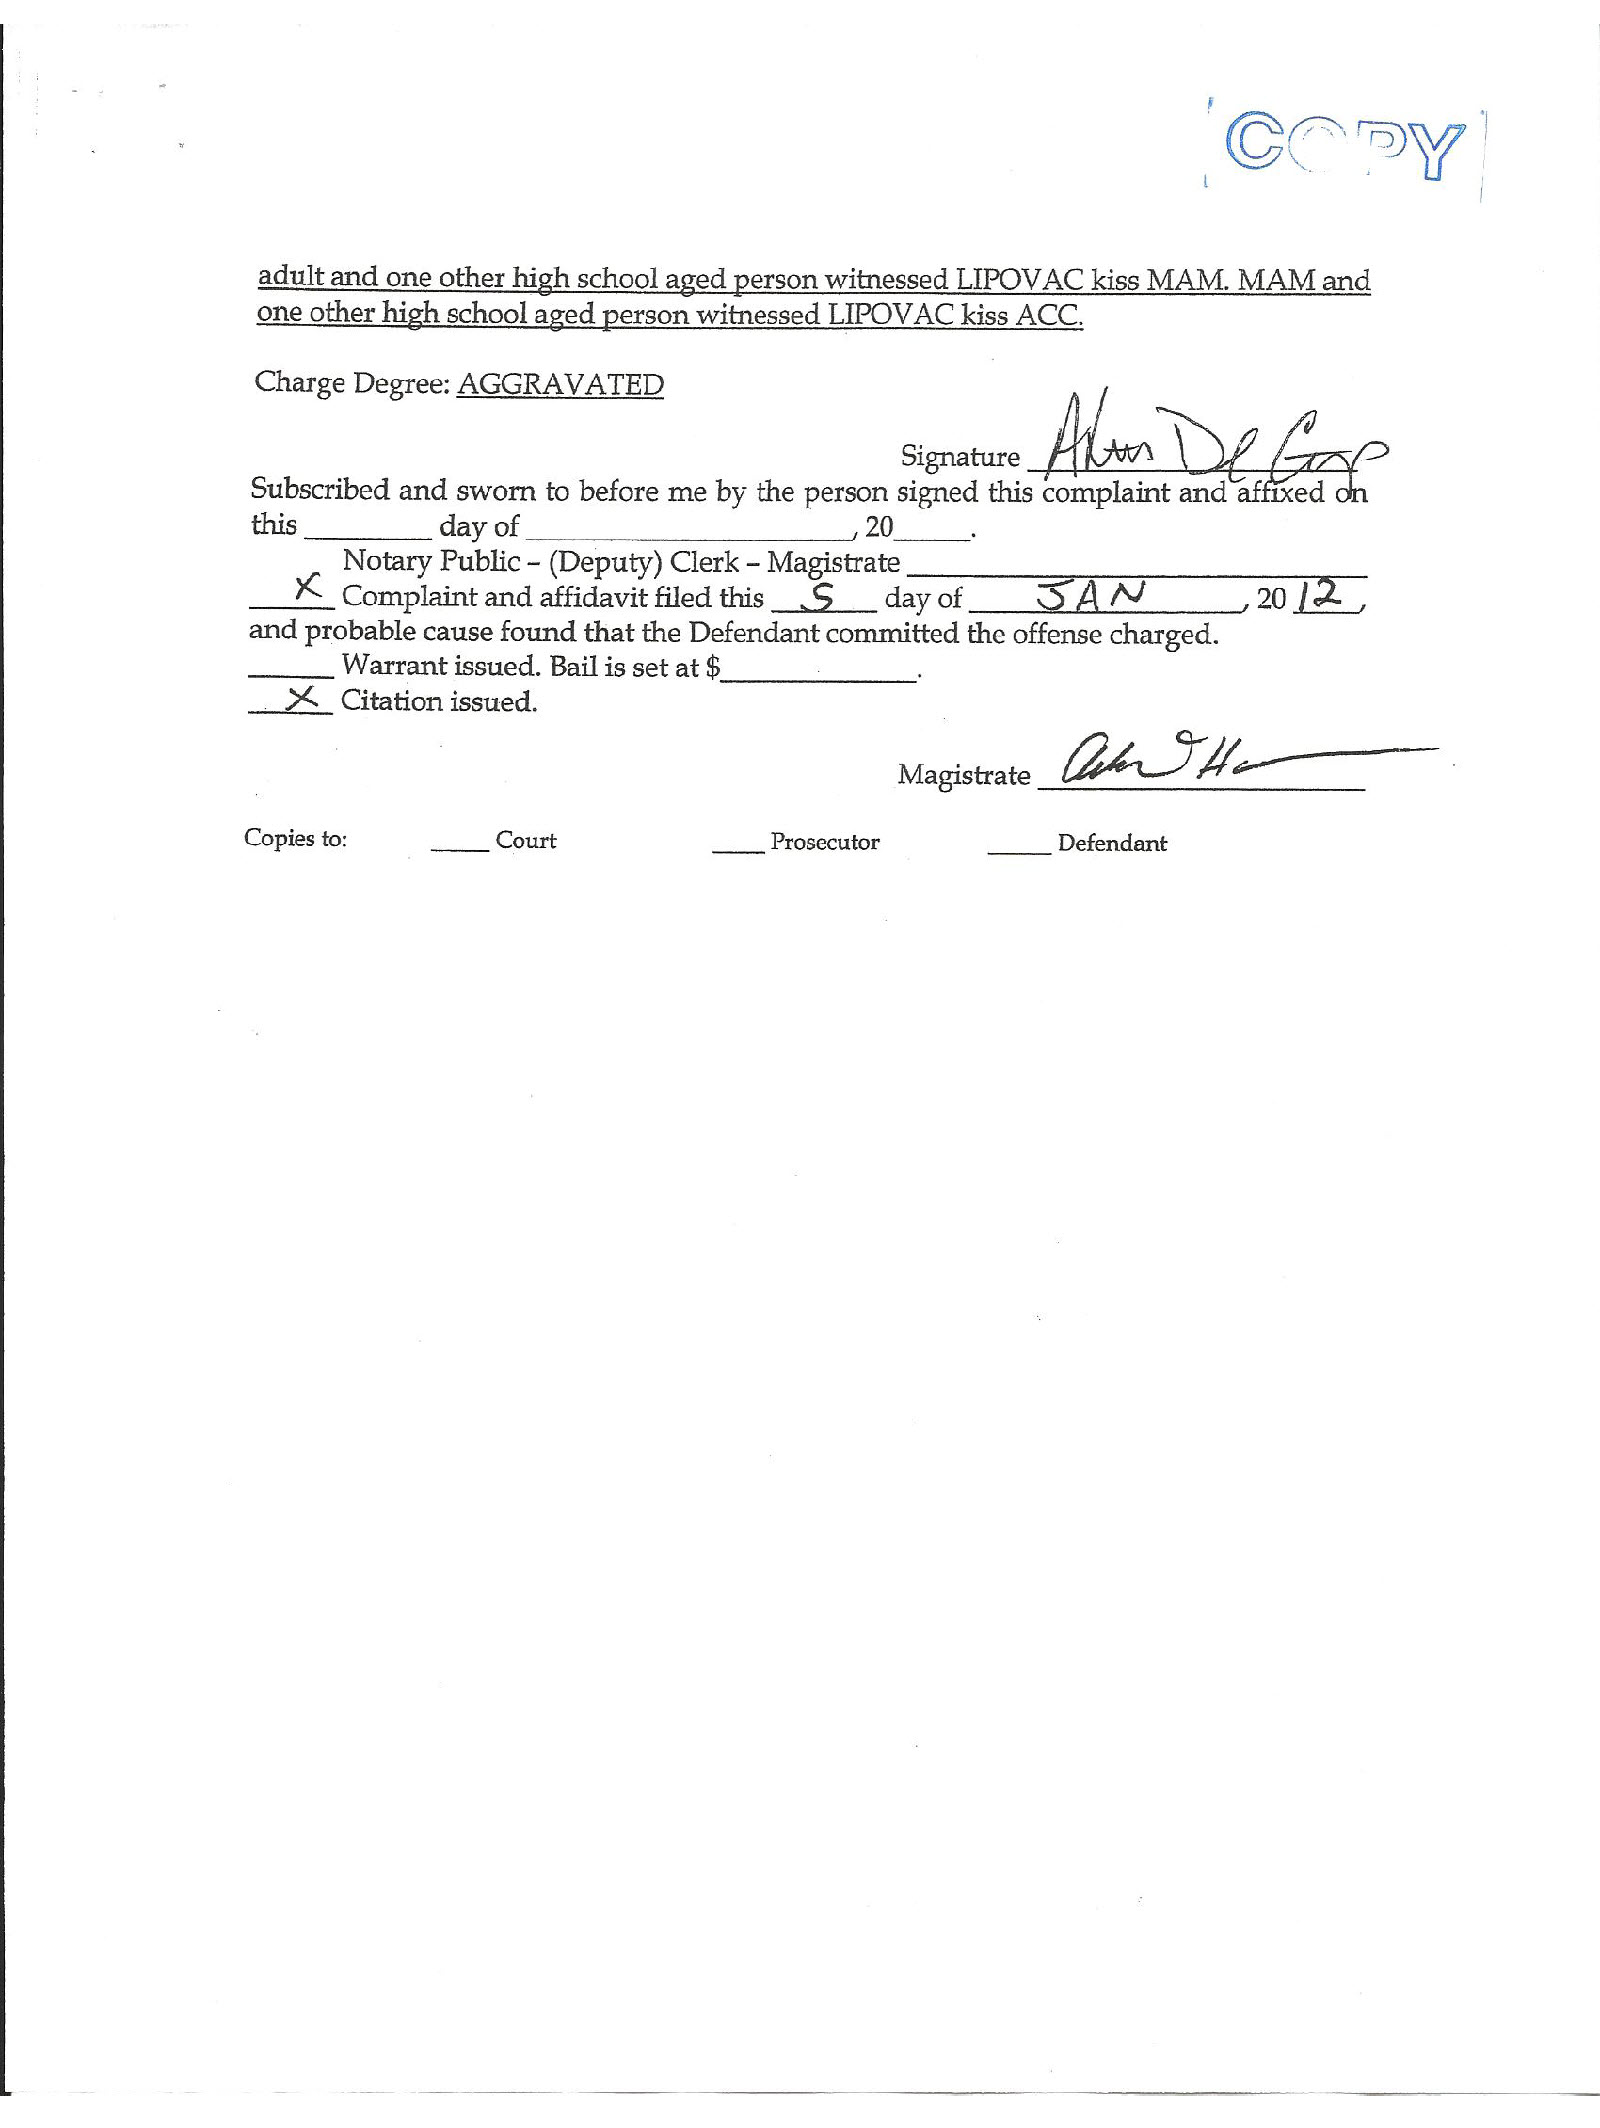 Copy of lipovac drew christopher arrest warrant5.jpg